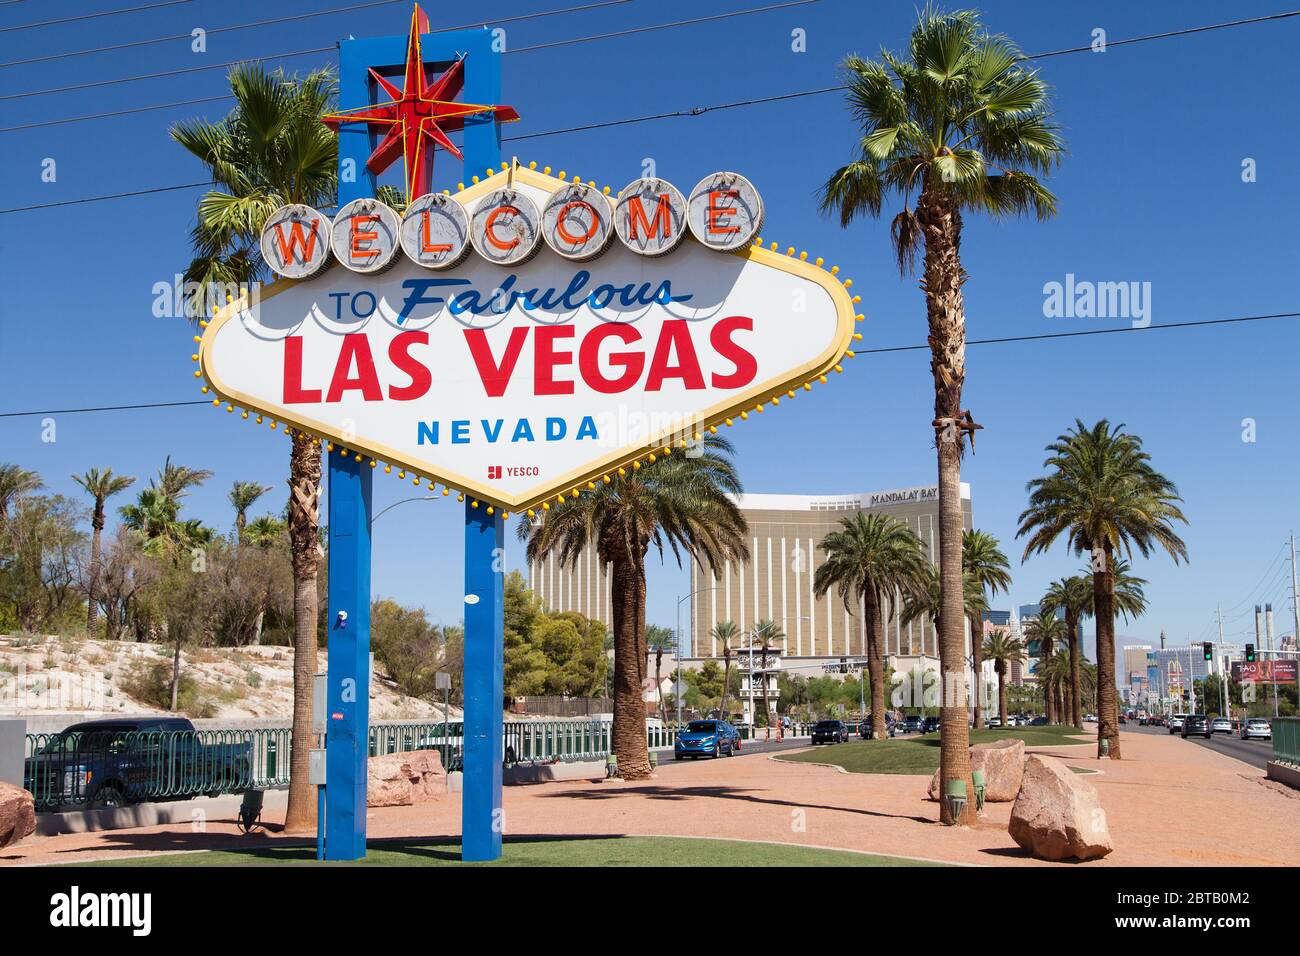 Las Vegas, Nevada - 30. August 2019: Das Welcome to Las Vegas Schild auf dem Strip, Las Vegas, Nevada, USA. Stockfoto